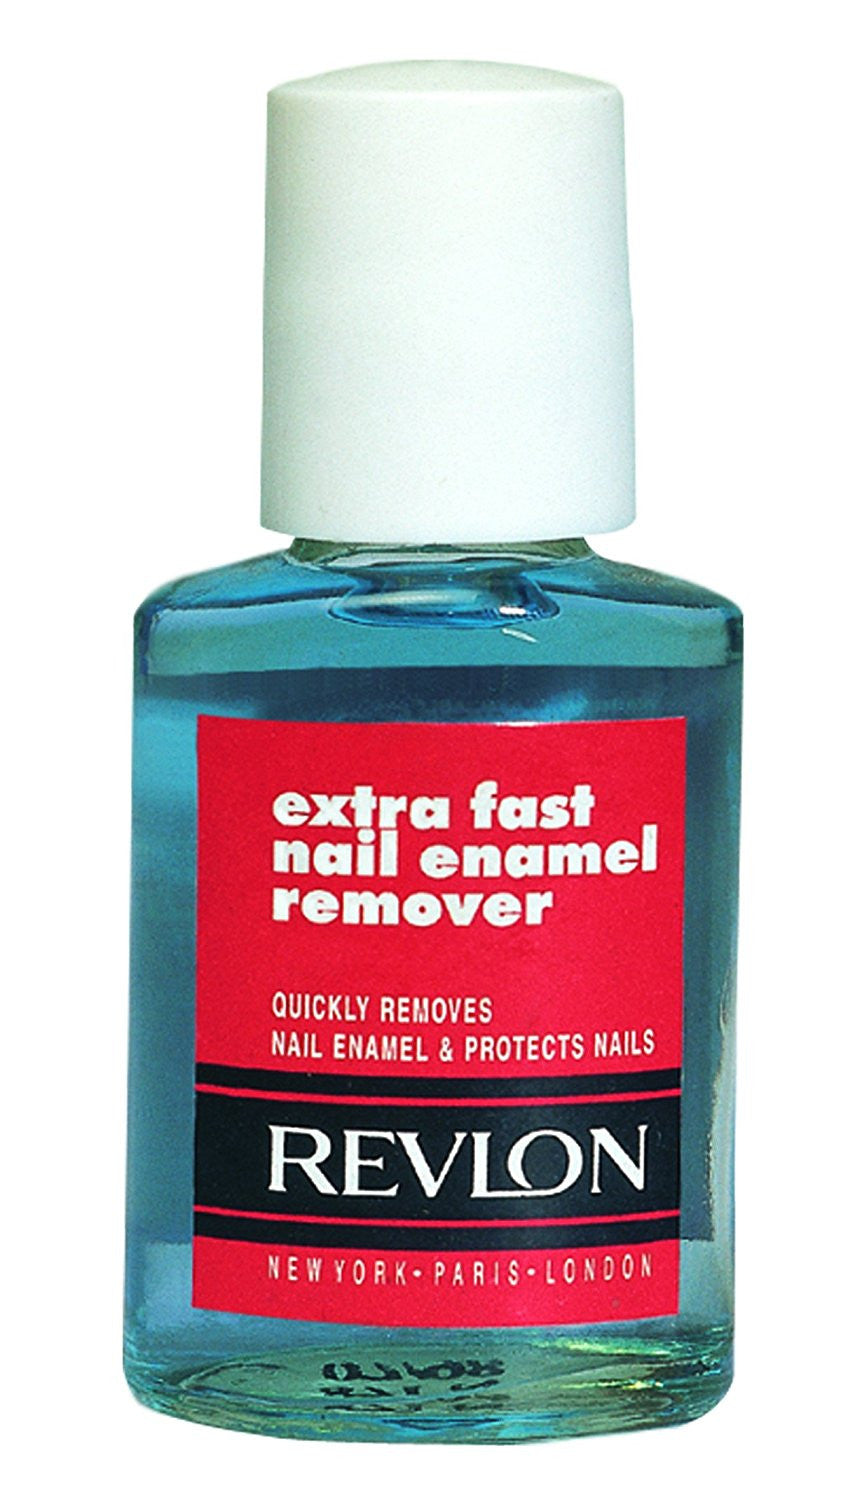 Revlon Posh - My Nail Polish Online | Nail polish, Nails, Essie